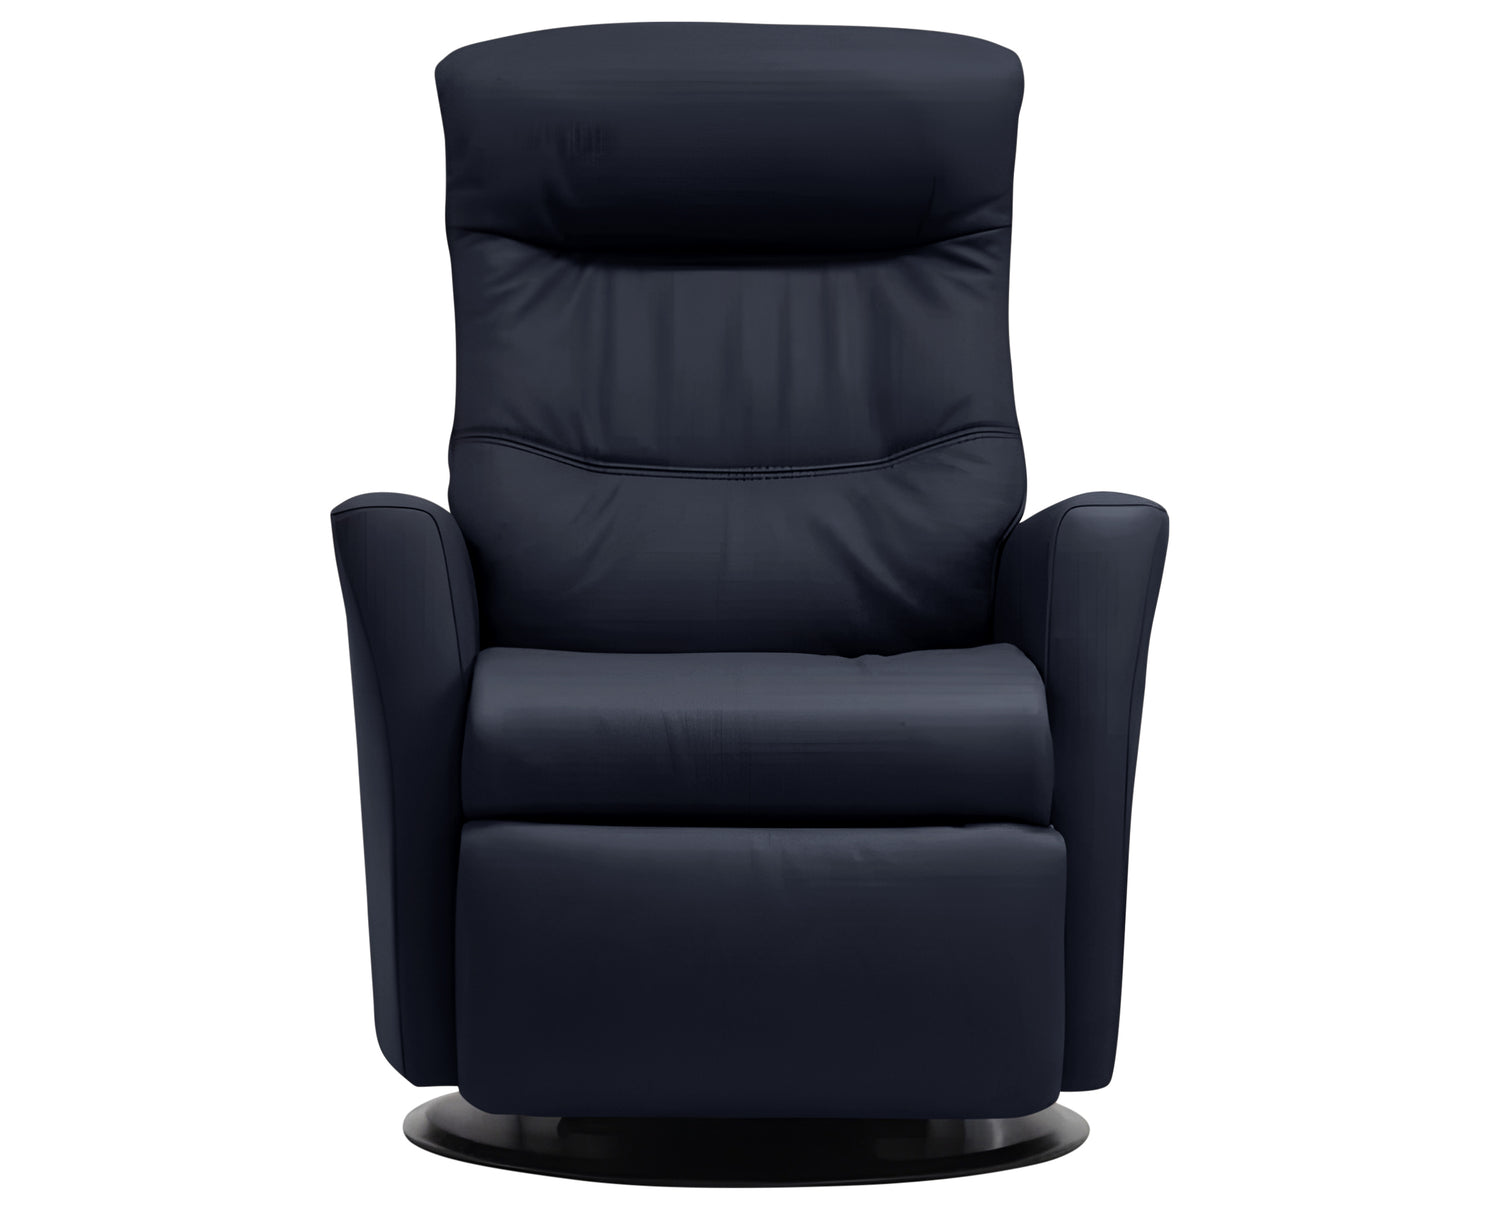 Trend Leather Tuxedo L | Norwegian Comfort Lord Recliner - Promo | Valley Ridge Furniture